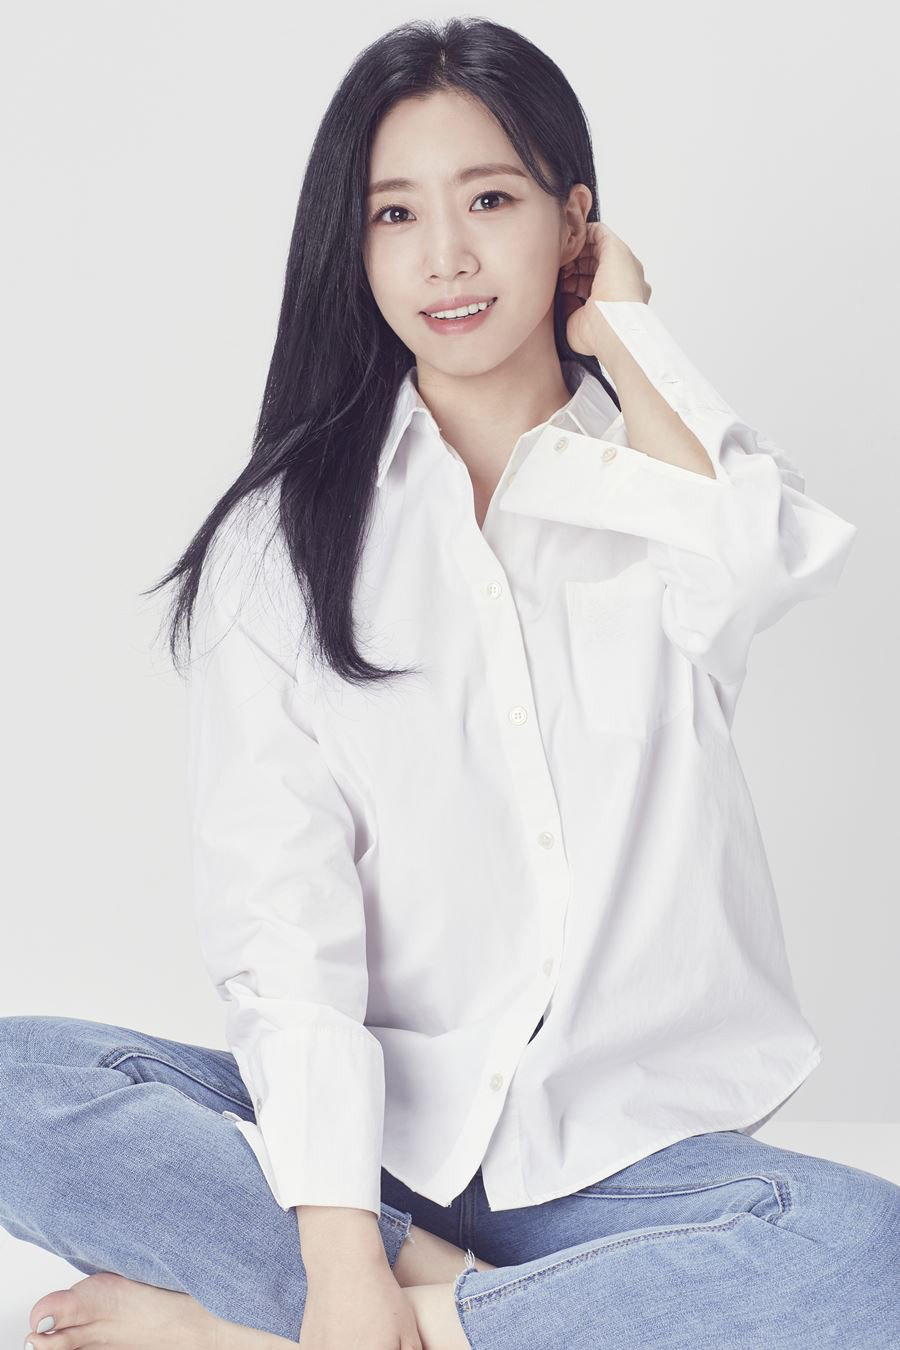 Eunjung Cabin74 profile photo